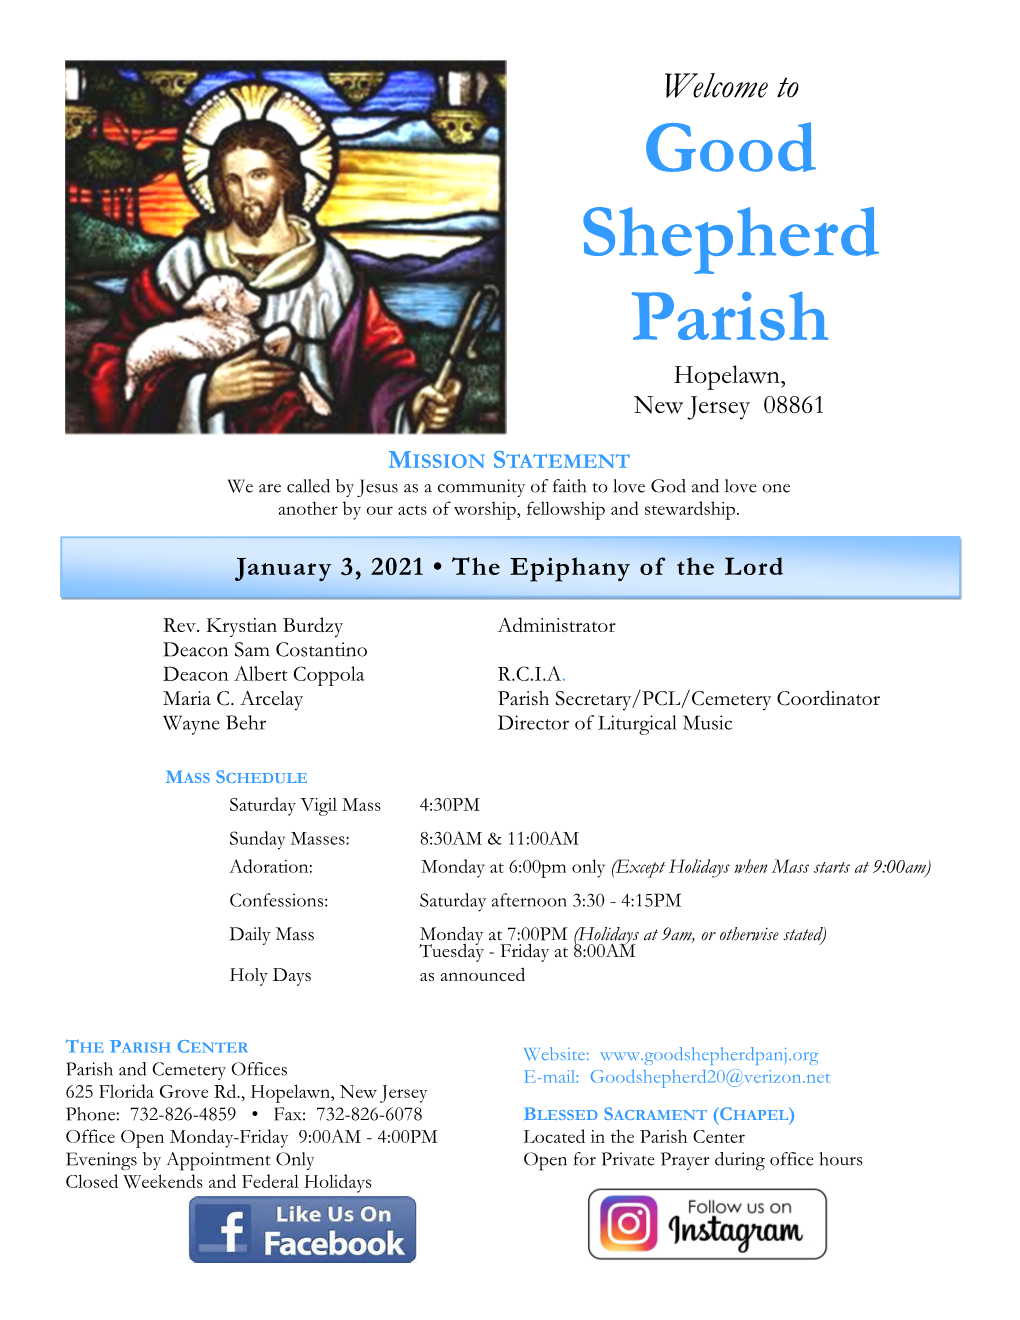 Good Shepherd Parish Hopelawn, New Jersey 08861